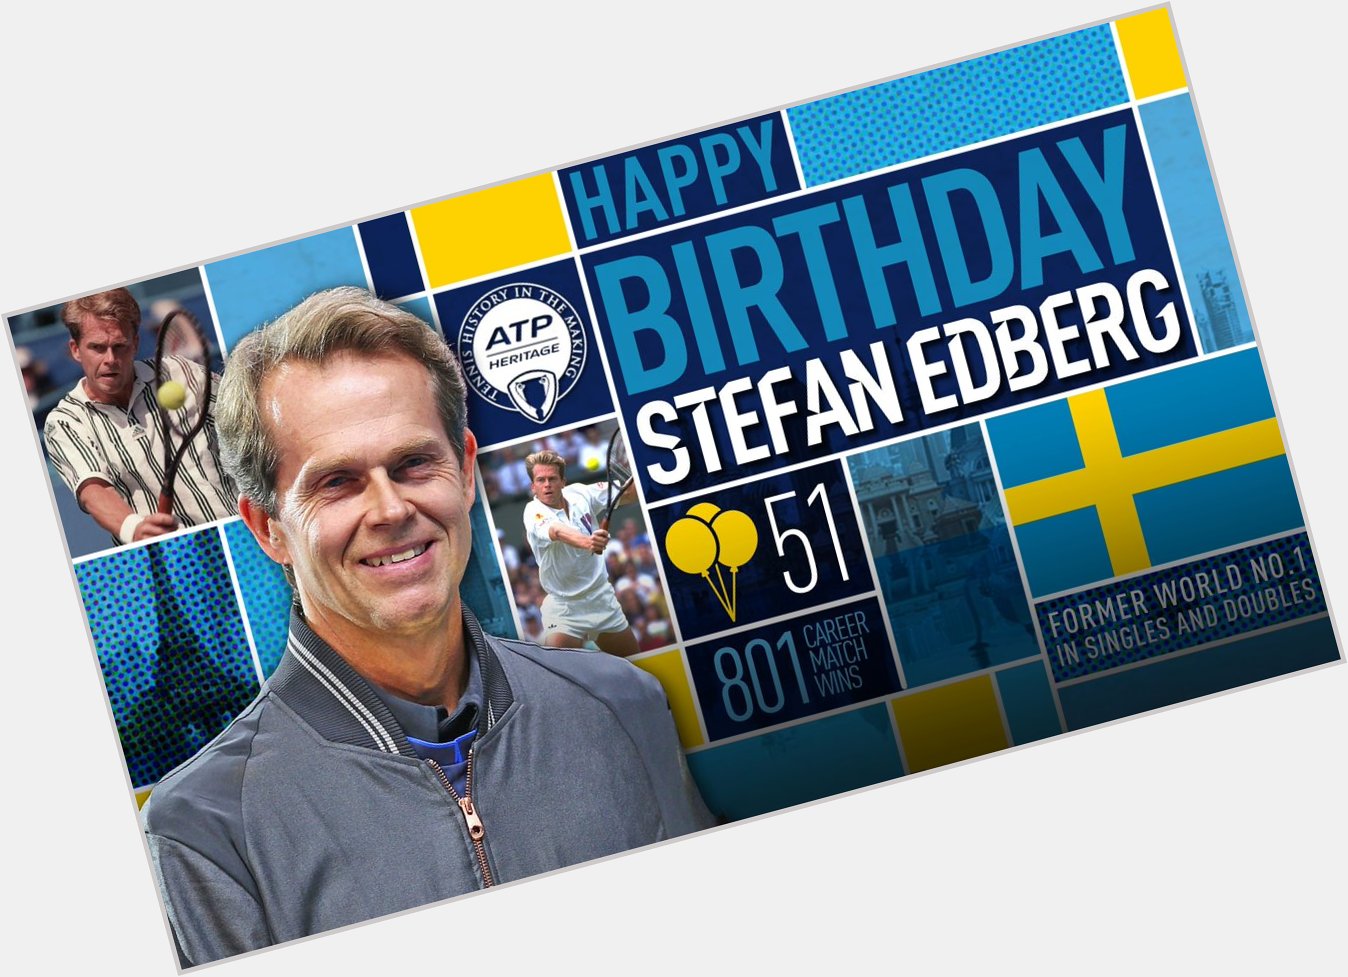 Happy birthday, Stefan   View Profile: Your favourite Edberg memory? 